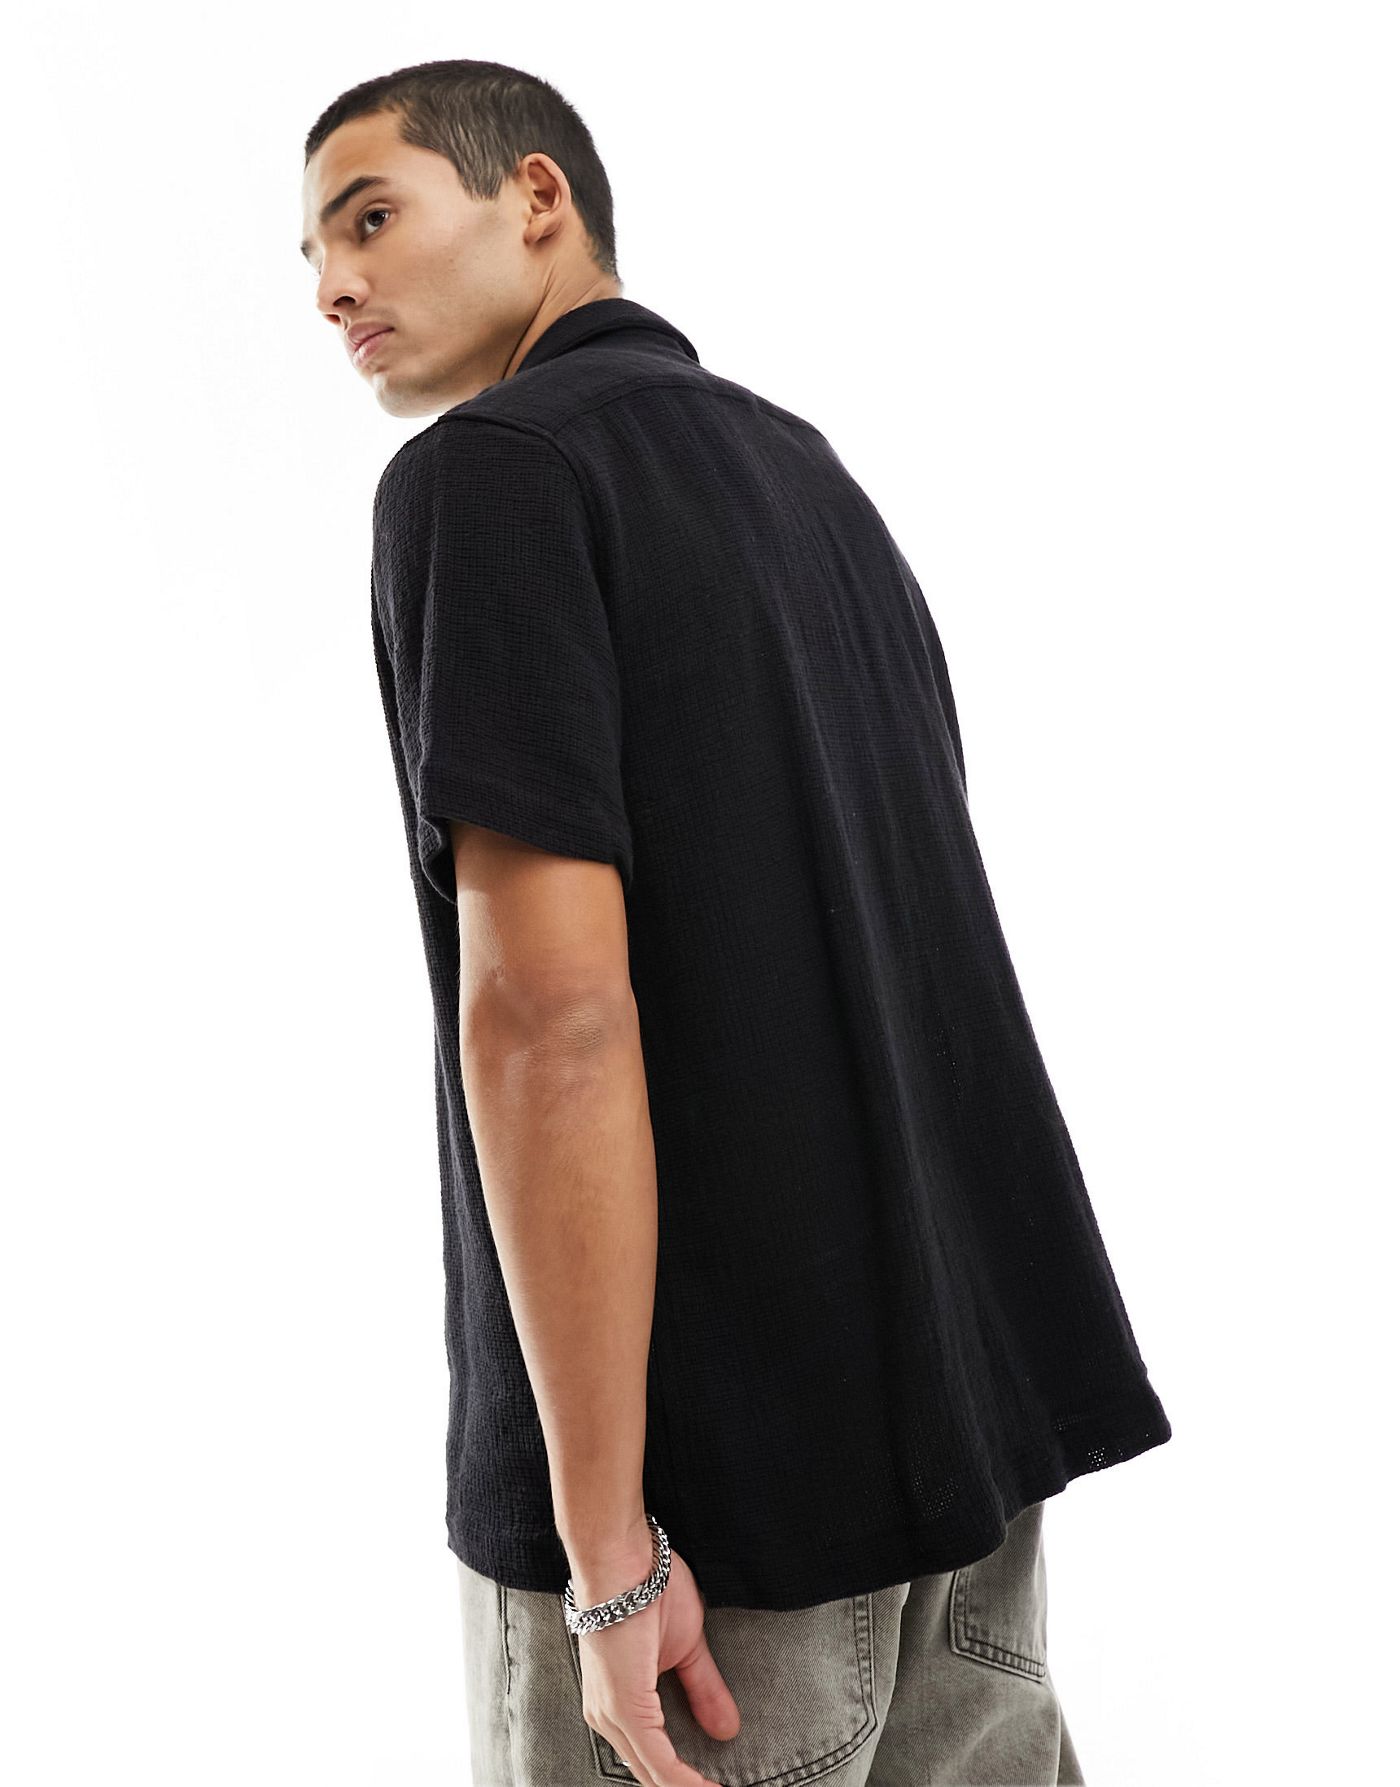 Cotton:On Palma short sleeve shirt in black